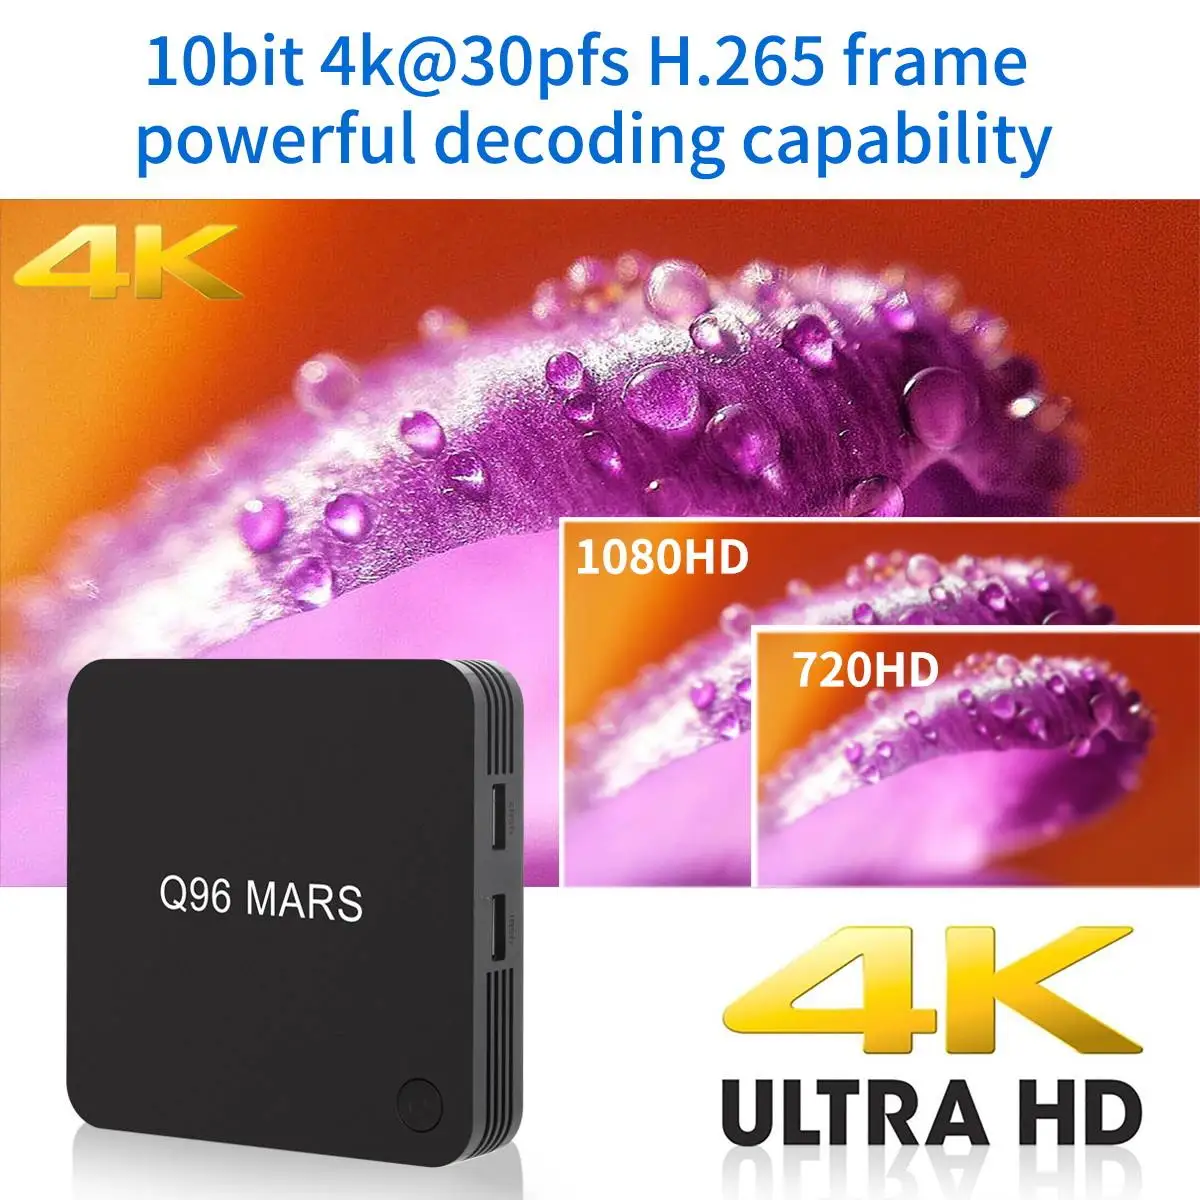 ТВ приставка Q96 MARS Amlogic S905L 1 ГБ DDR3 ram 8G EMMC 8 Гб rom Android 7,1 HD H.265 3D HDMI 2,4G wifi ТВ приставка